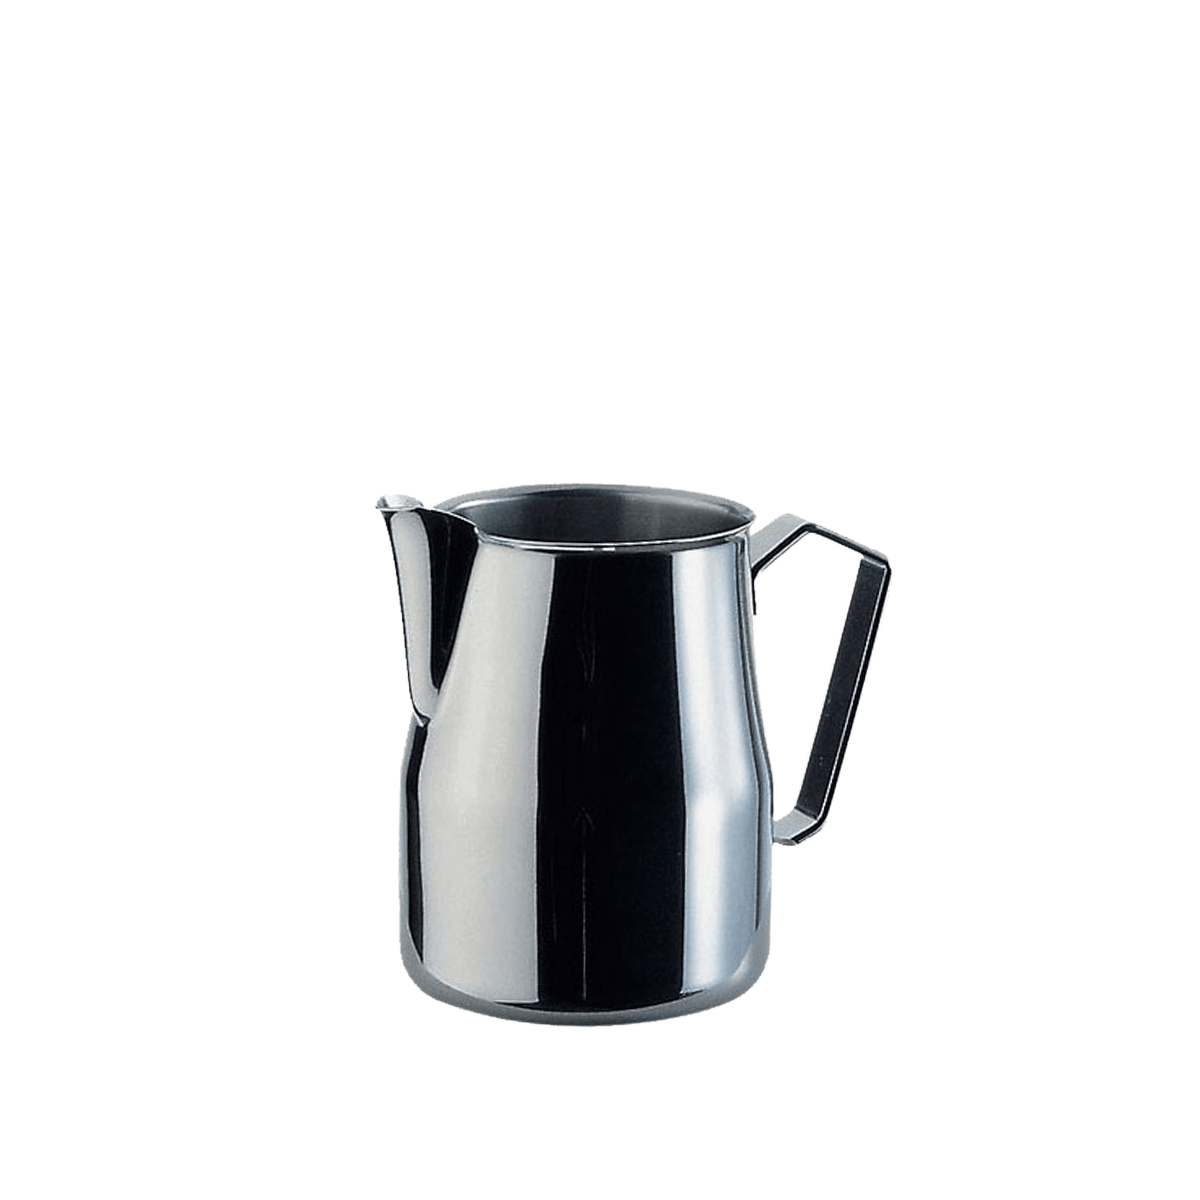 Teflon milk pitcher - Motta - Stainless steel